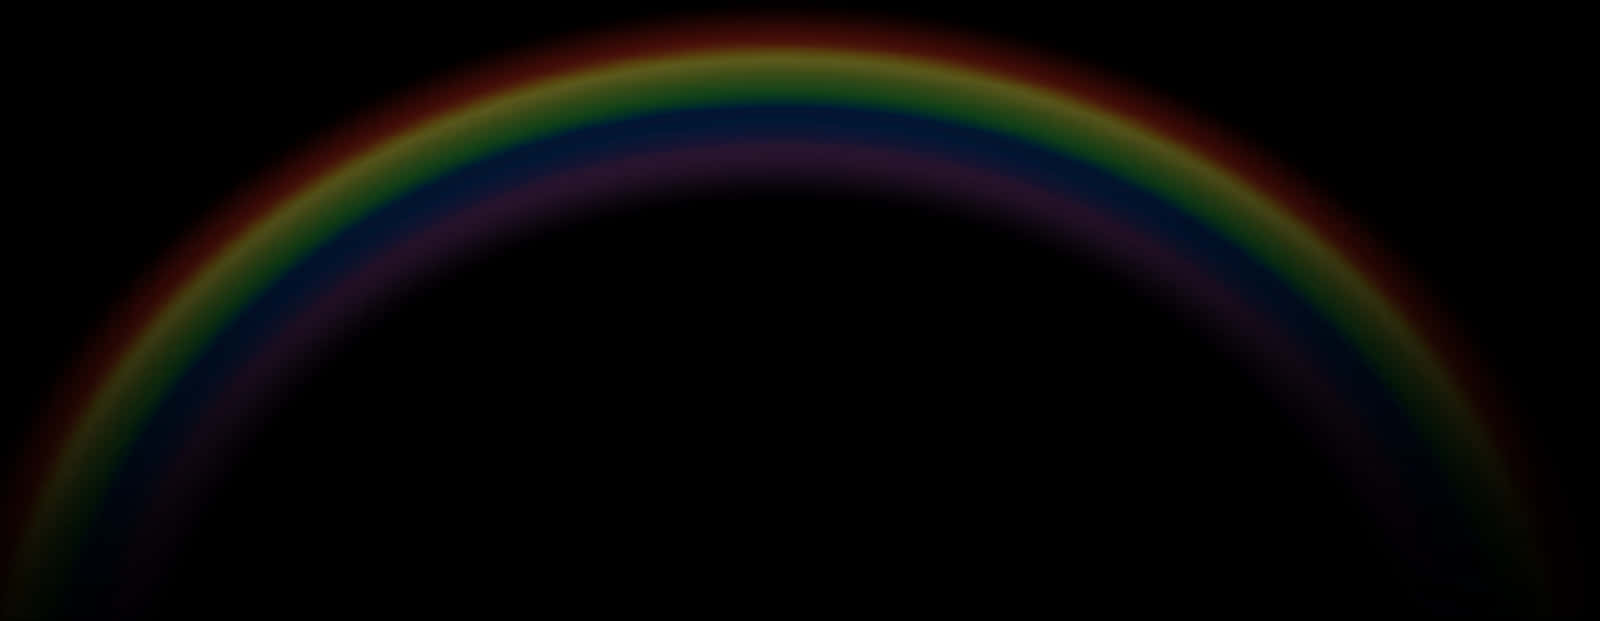 Vibrant_ Rainbow_ Against_ Dark_ Background.jpg PNG image